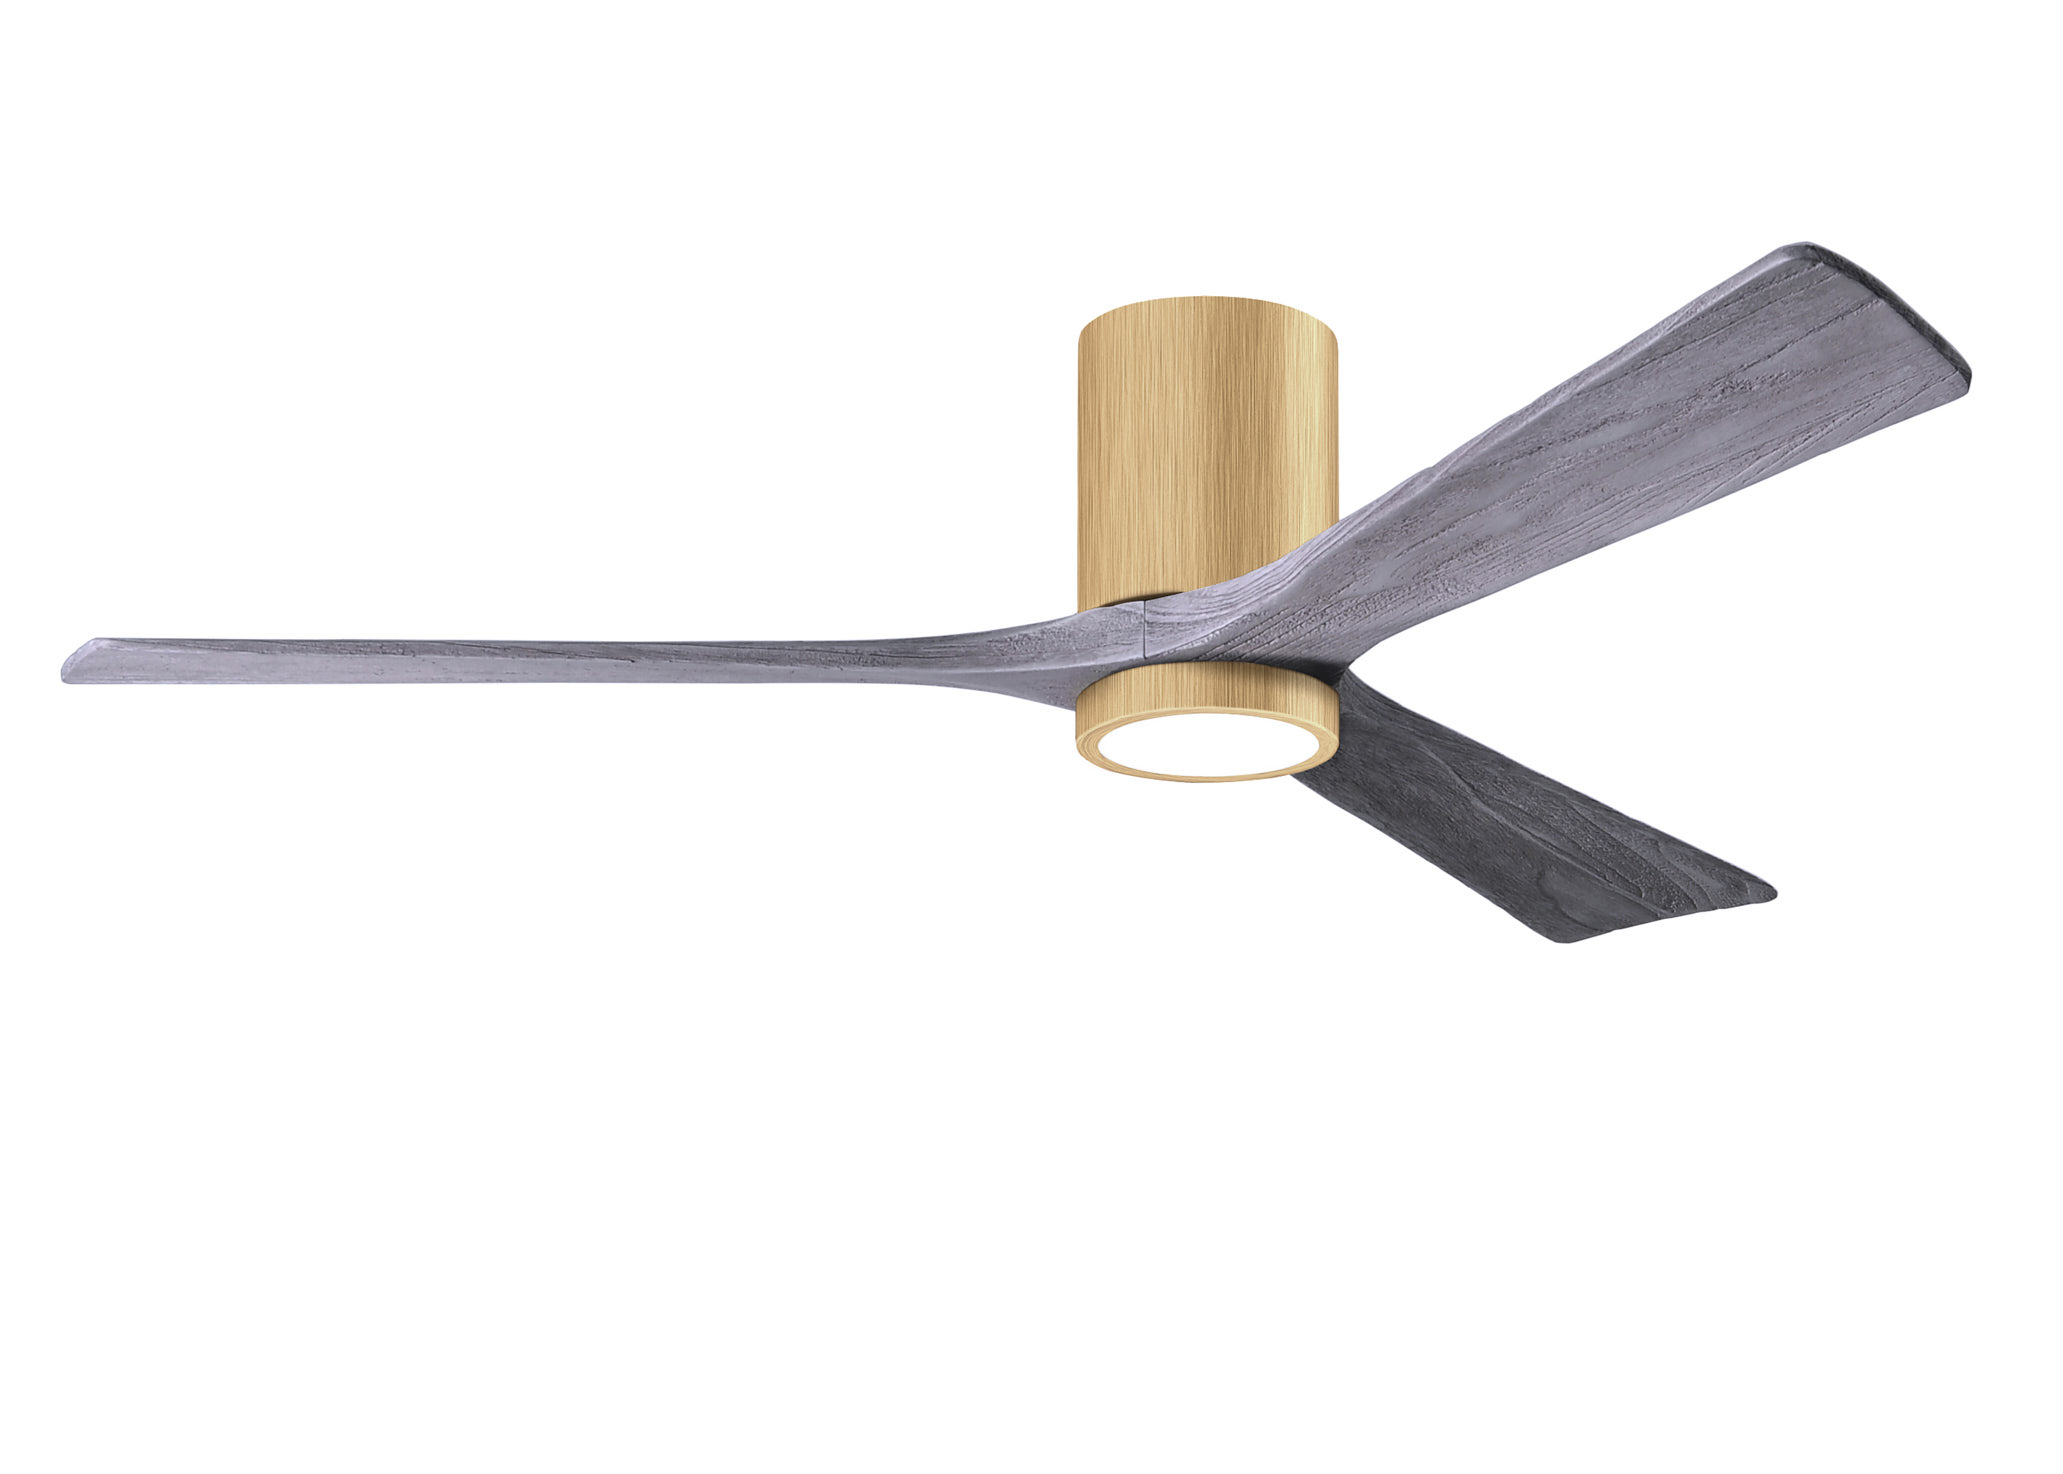 Irene-3HLK 6-speed ceiling fan in light maple finish with 60